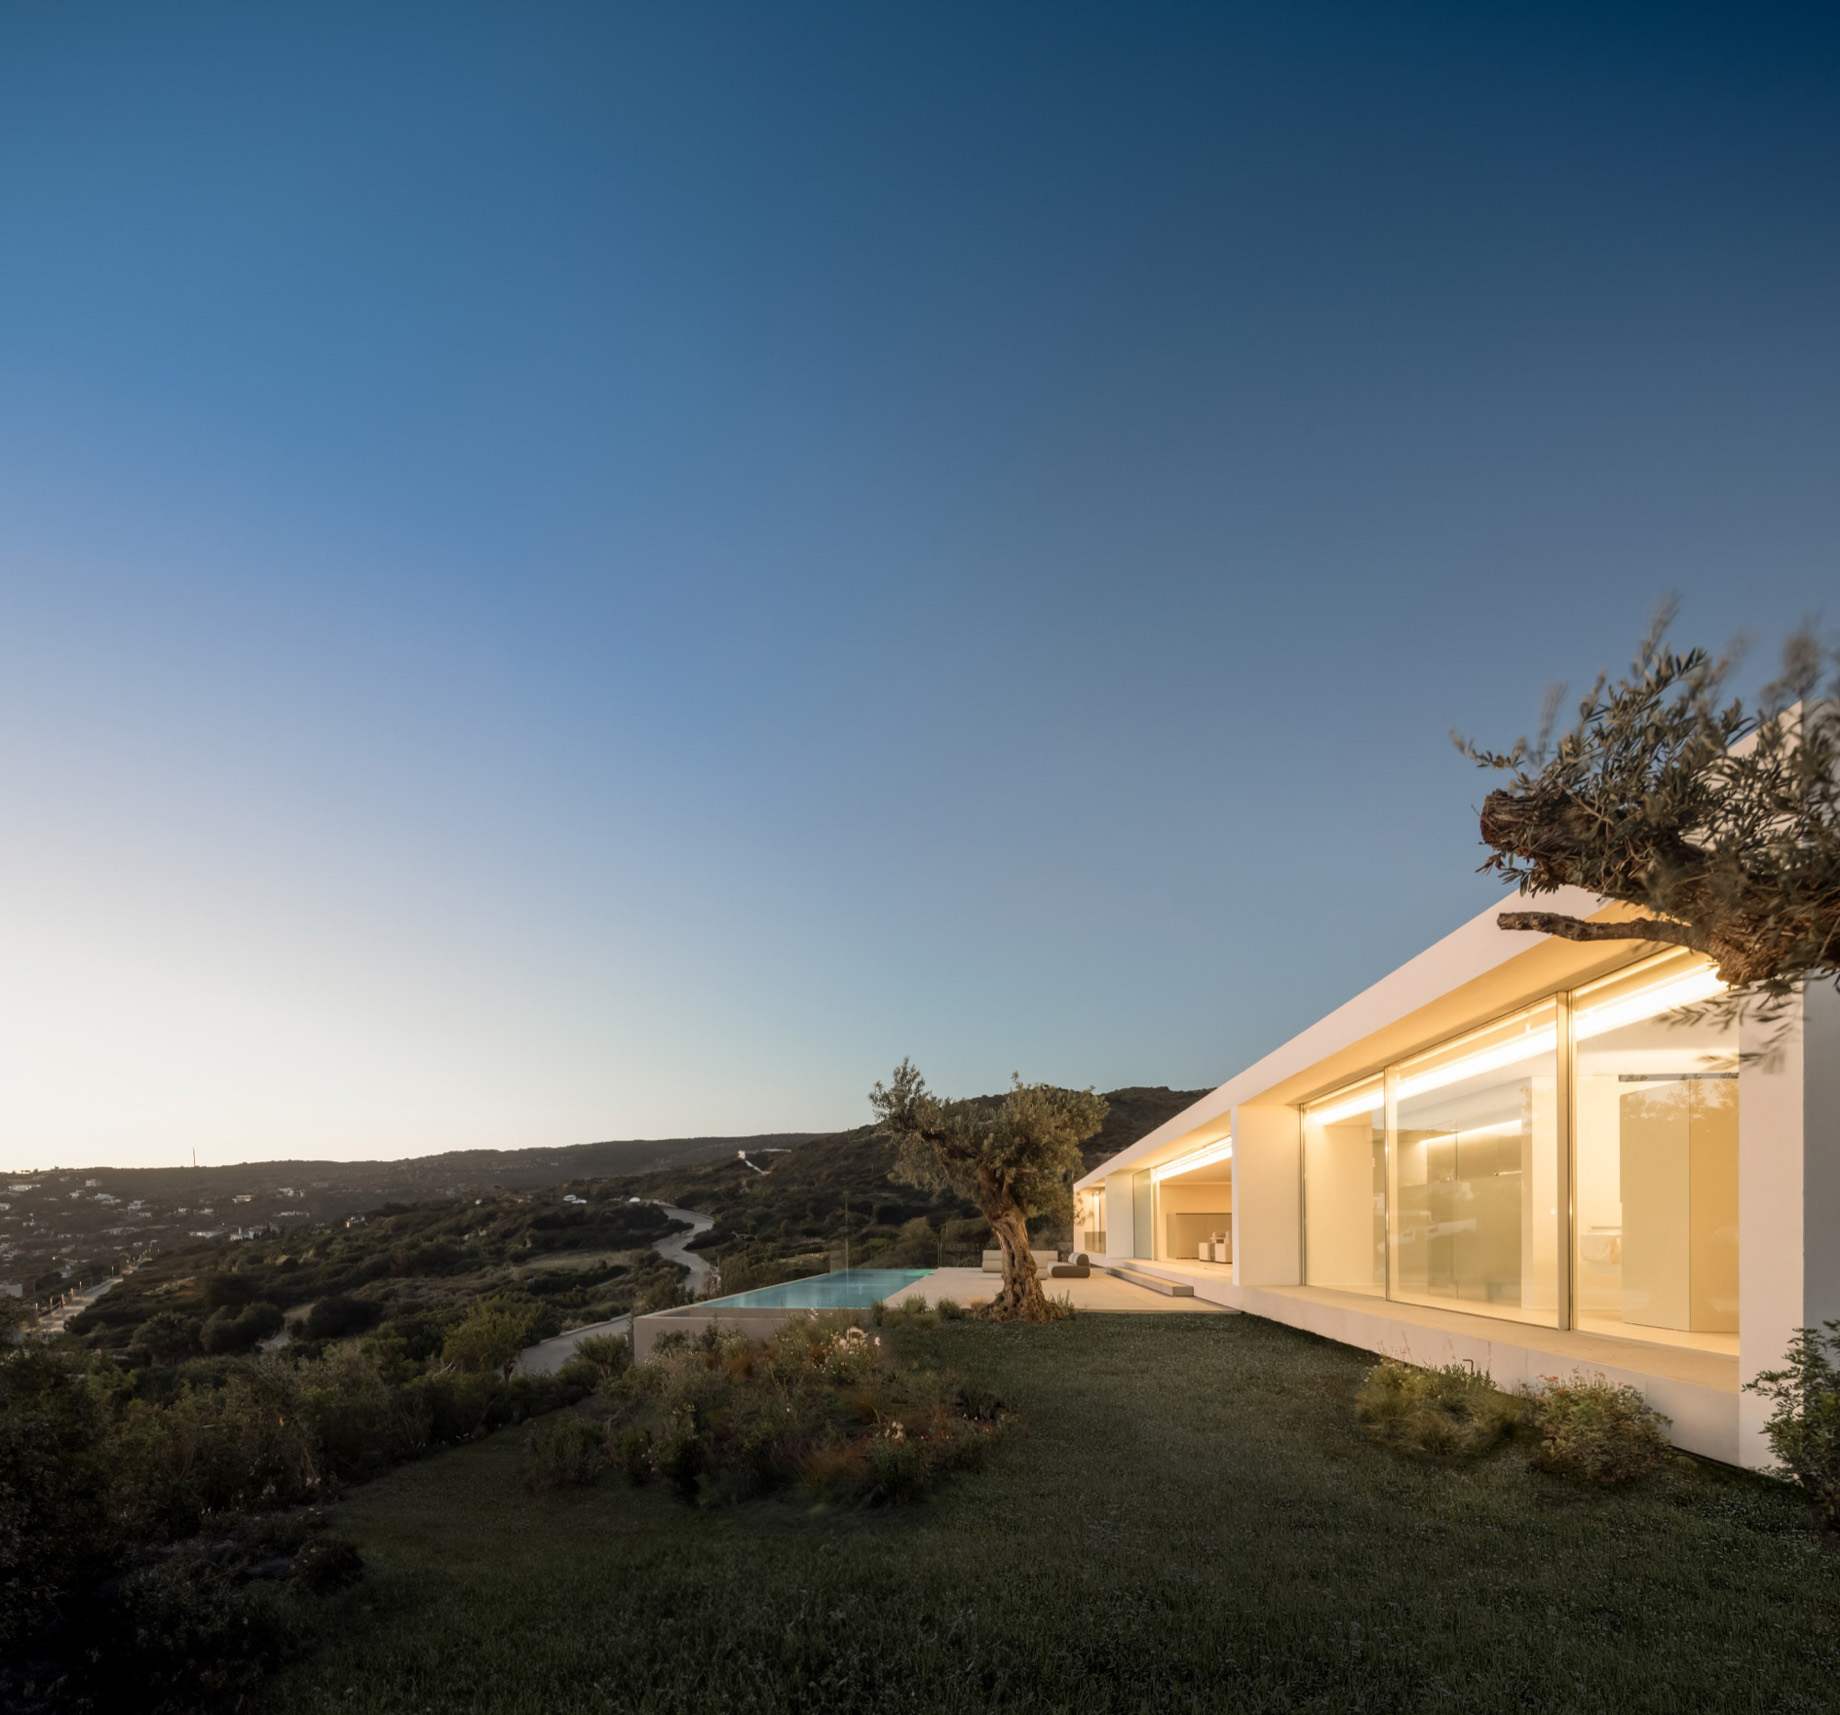 House on the Air Modern Contemporary Villa – Zahara de los Atunes, Spain – 59